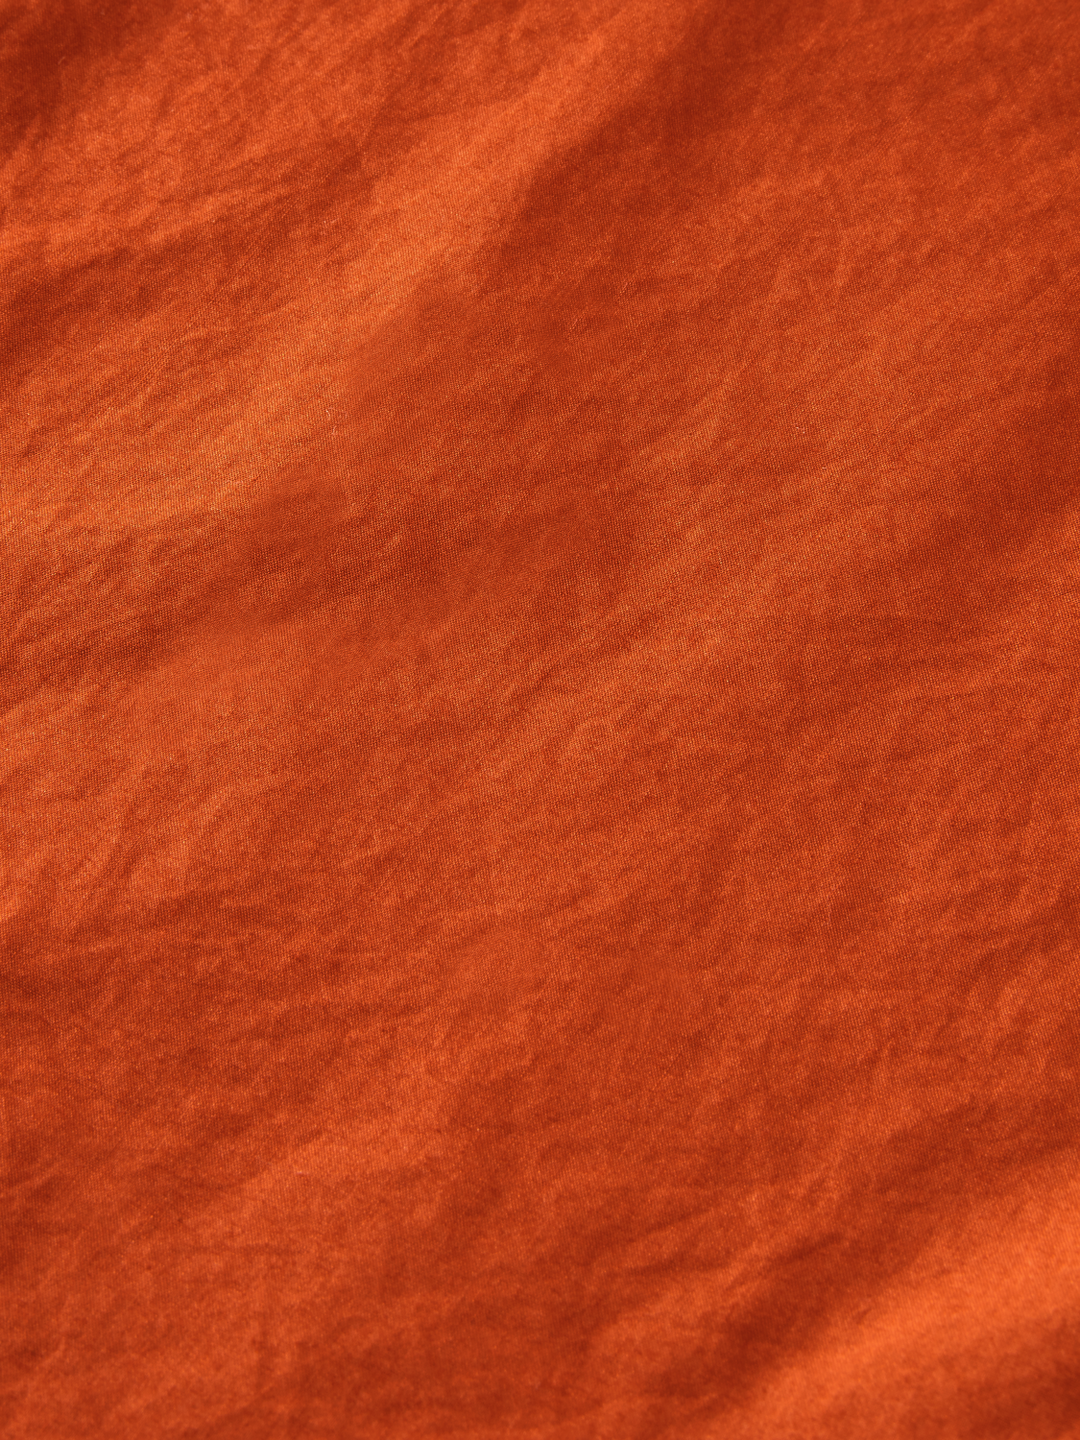 Scotch & Soda - Regular Fit Cotton Poplin Shirt in Burned Orange | Buster McGee